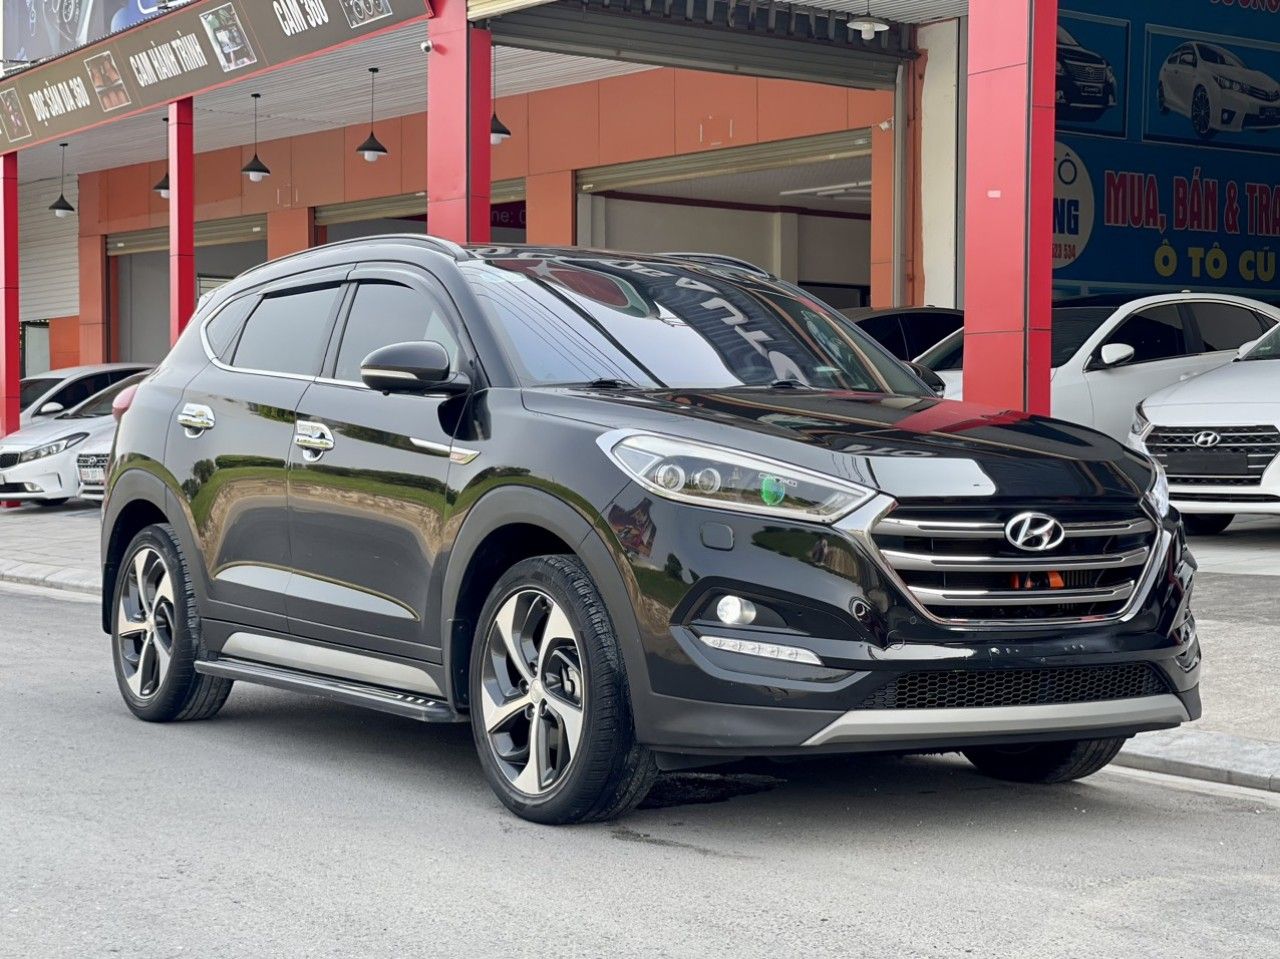 Hyundai Tucson 2018 - Bản cao cấp nhất